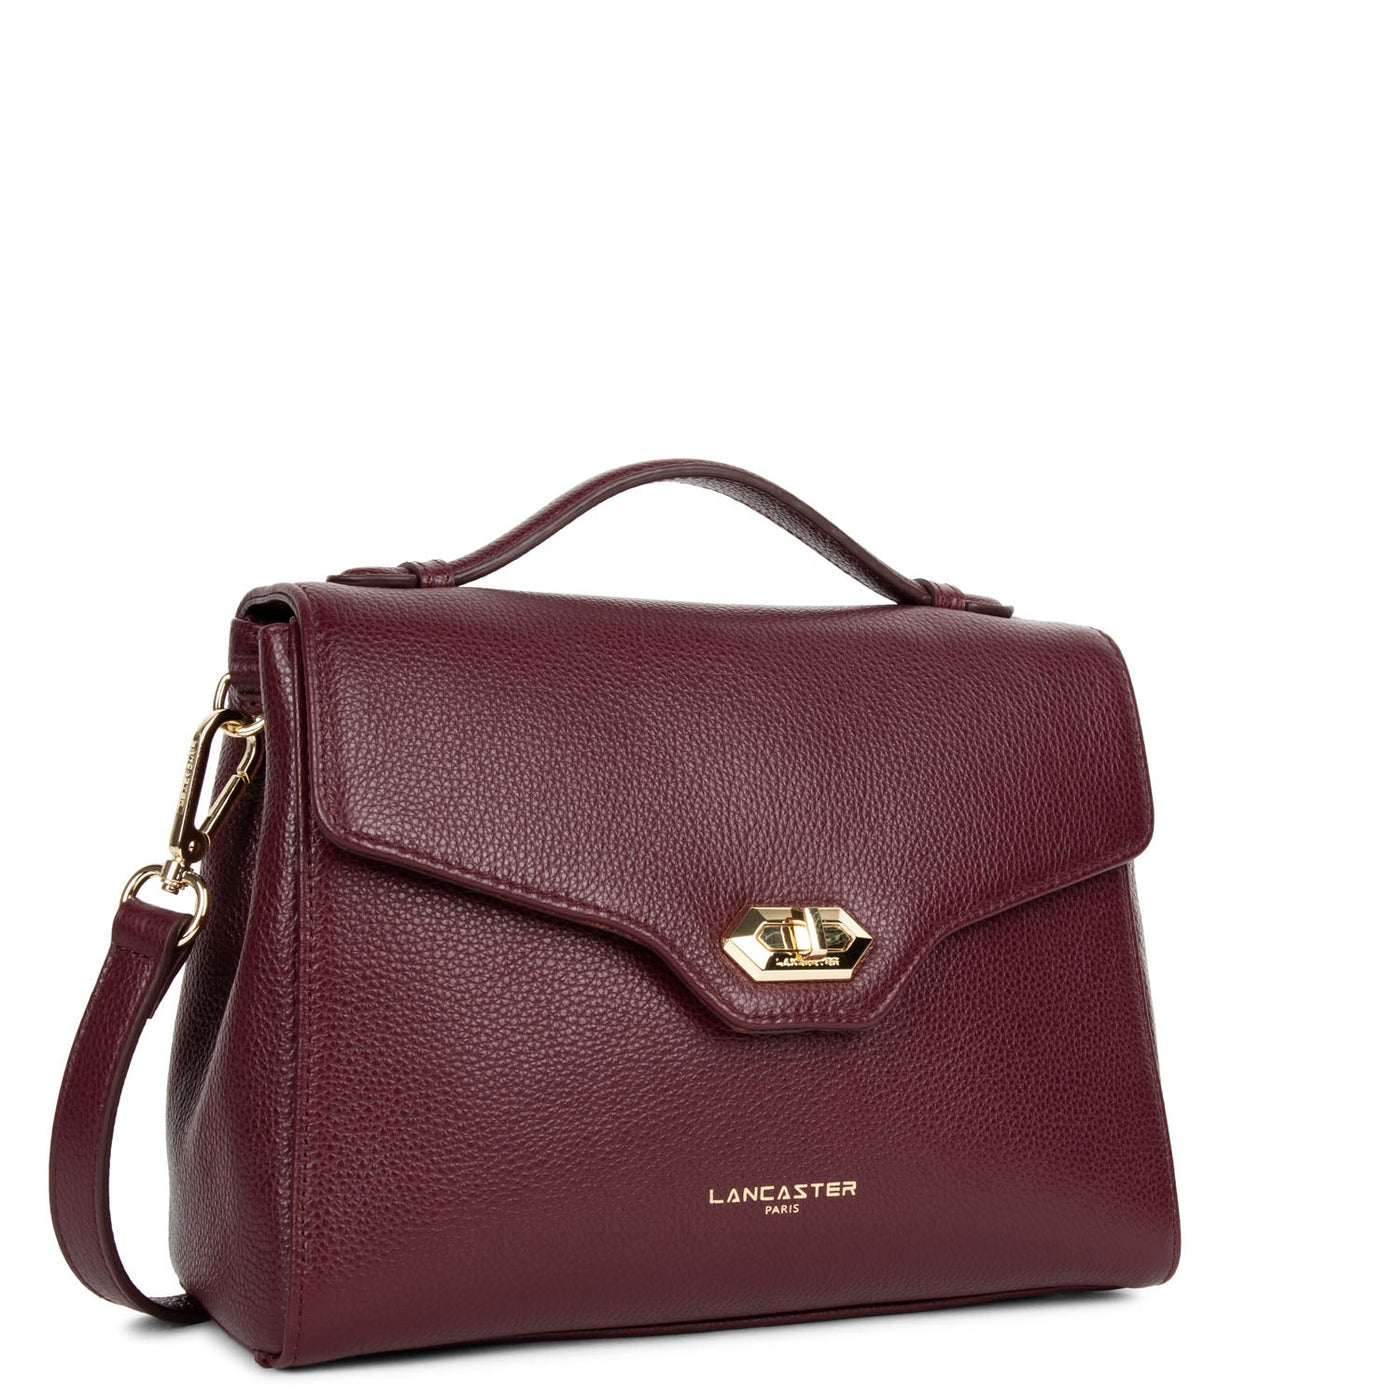 handbag - foulonné milano #couleur_pourpre